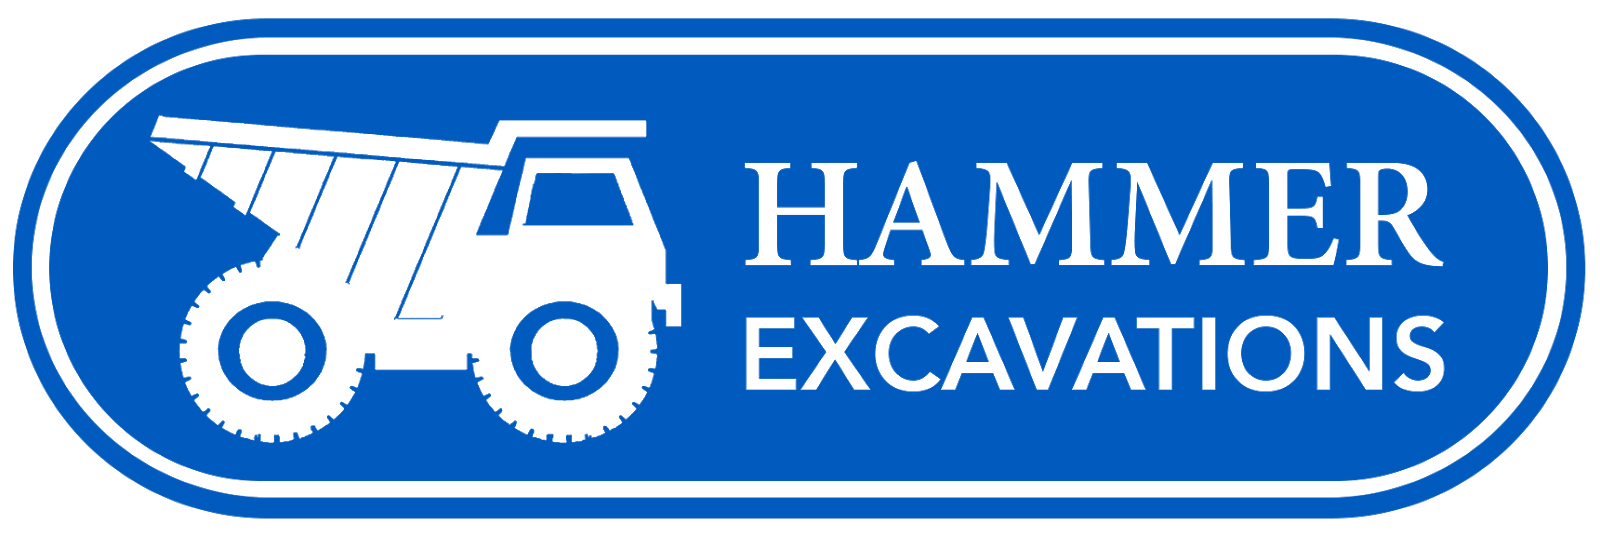 hammer excavations logo